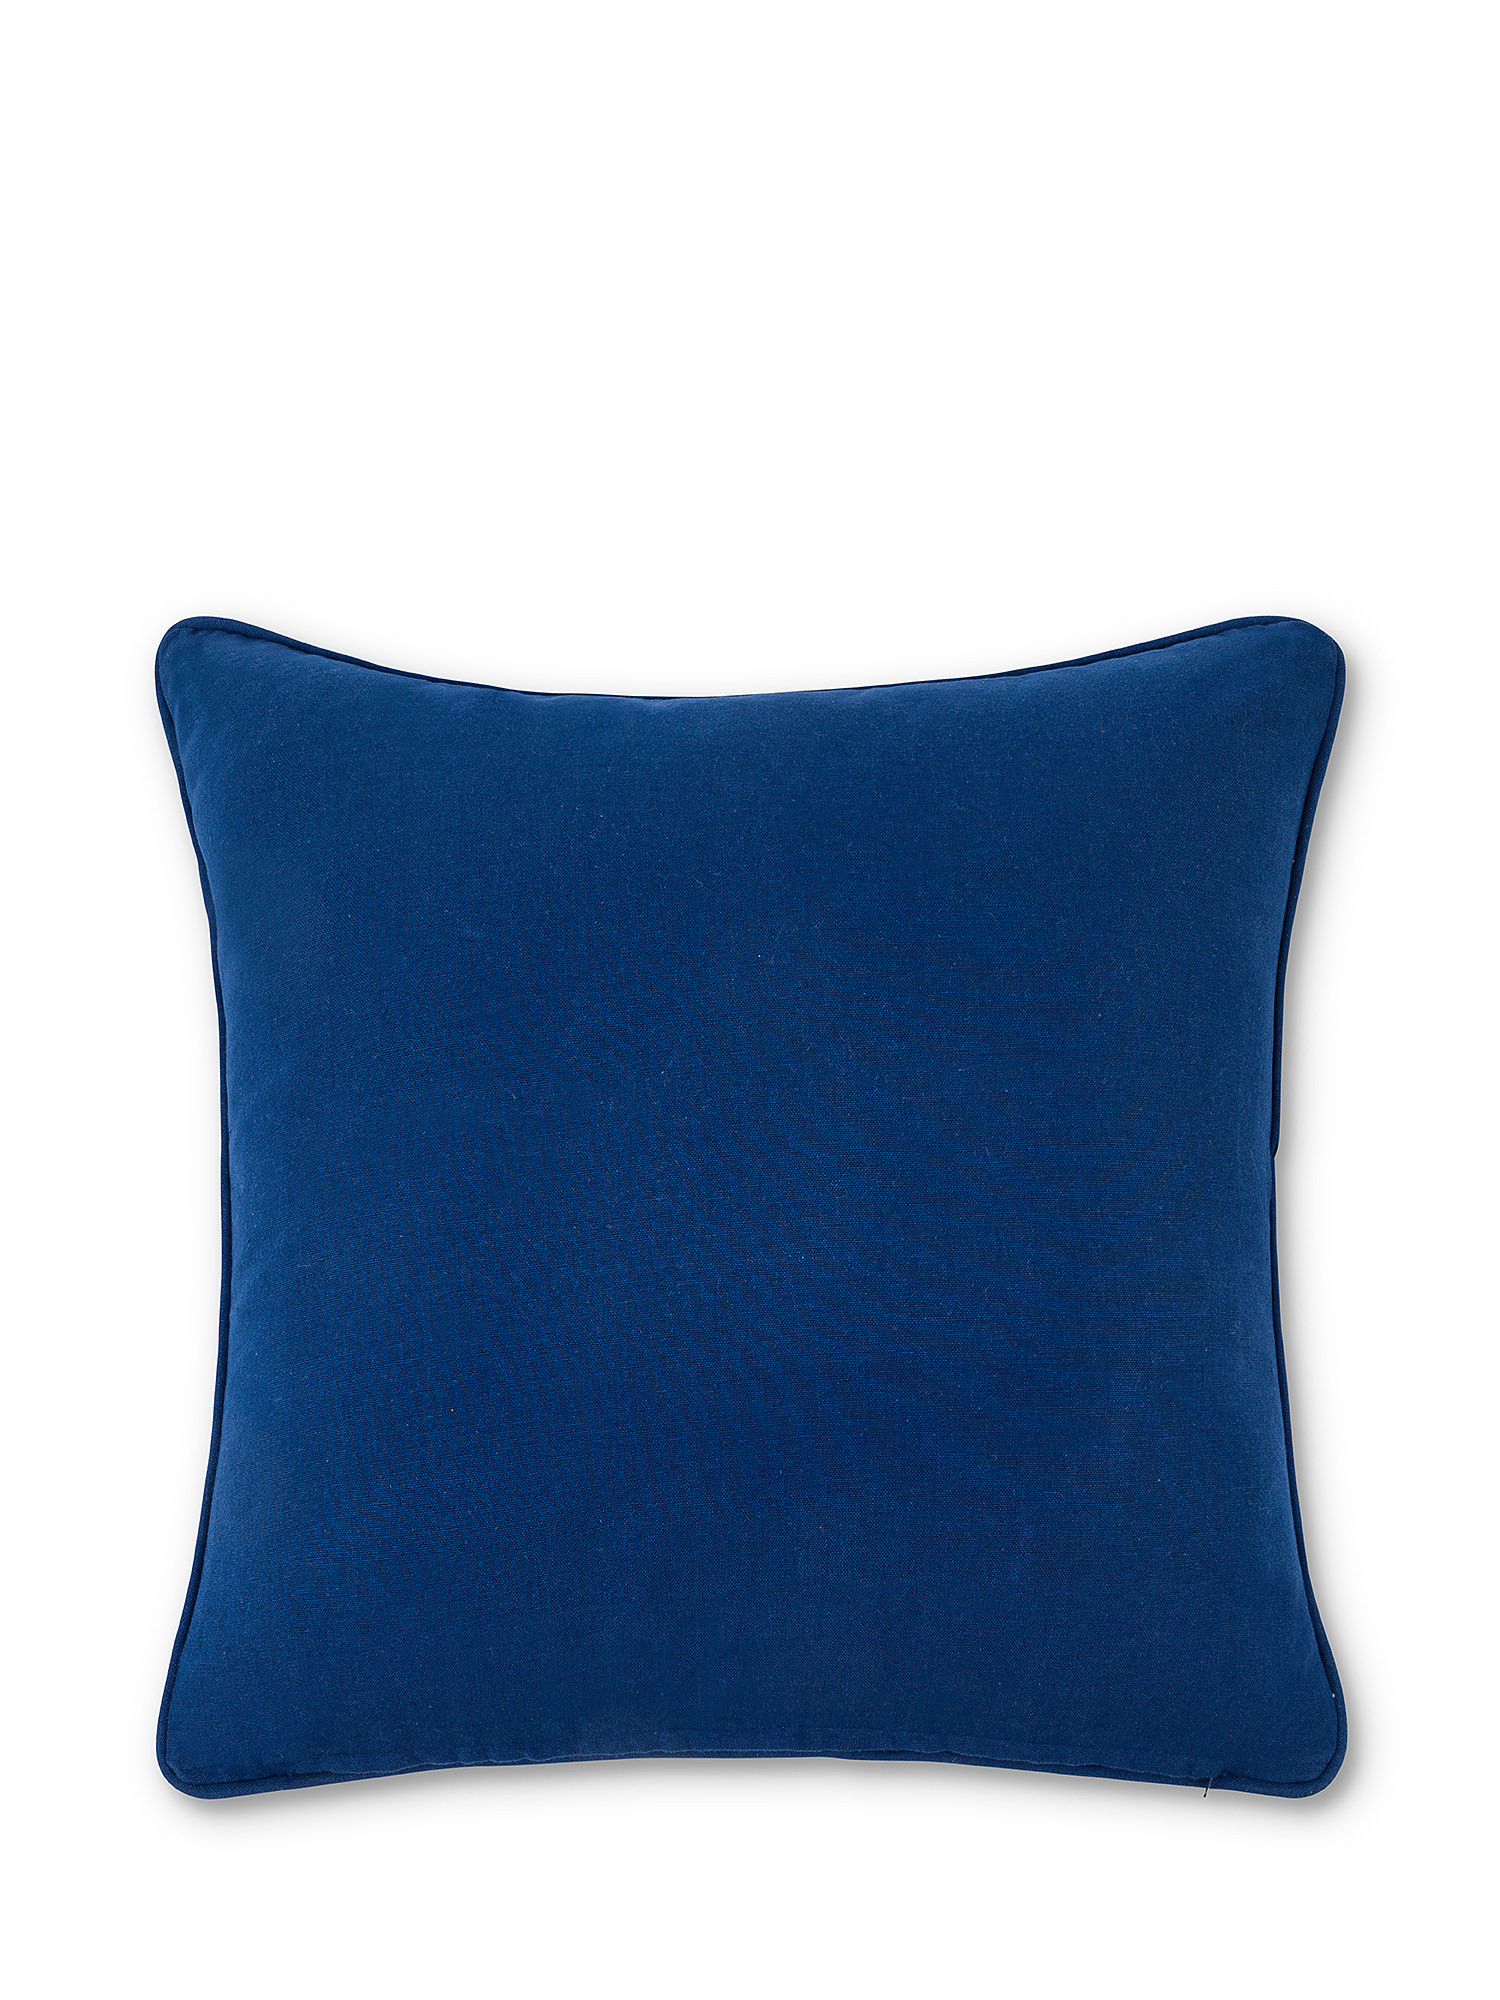 Cuscino cotone tessuto dobby 45x45cm, Azzurro, large image number 1